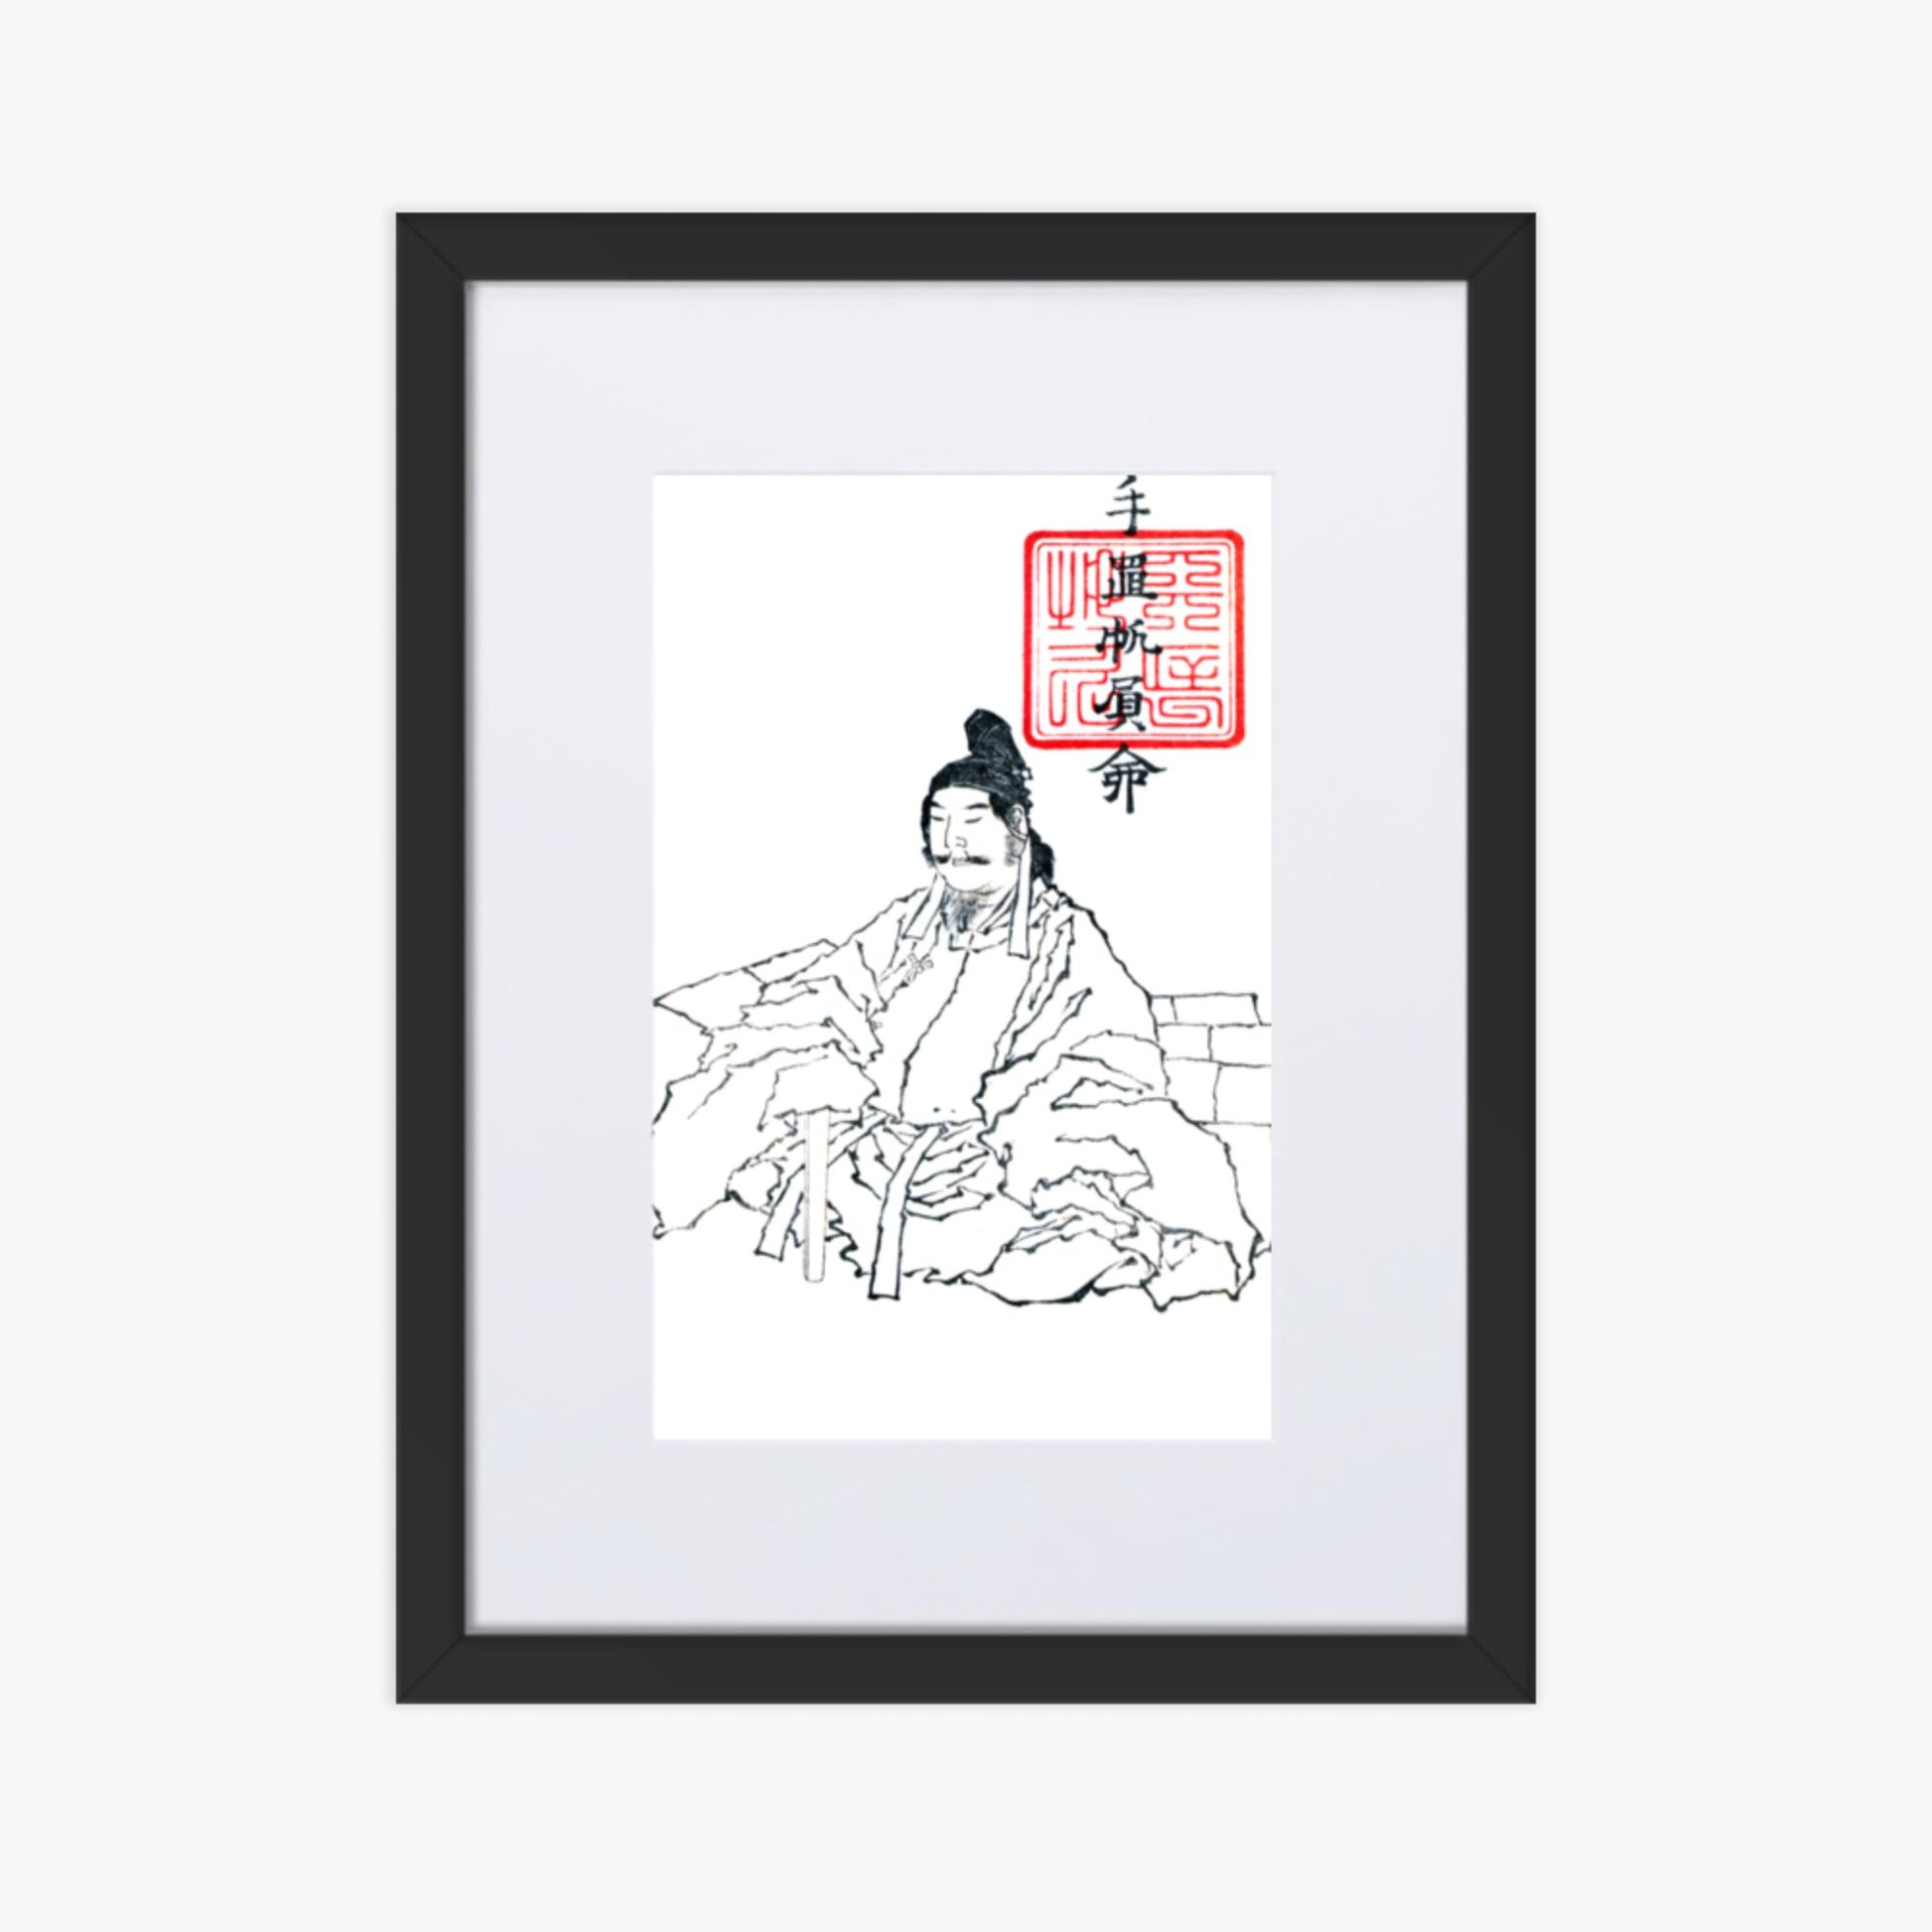 Katsushika Hokusai - Transmitting the Spirit, Revealing the Form of Things: Hokusai Sketchbooks, volume 5 (part) (Denshin kaishu: Hokusai manga, gohen) 30x40 cm Poster With Black Frame